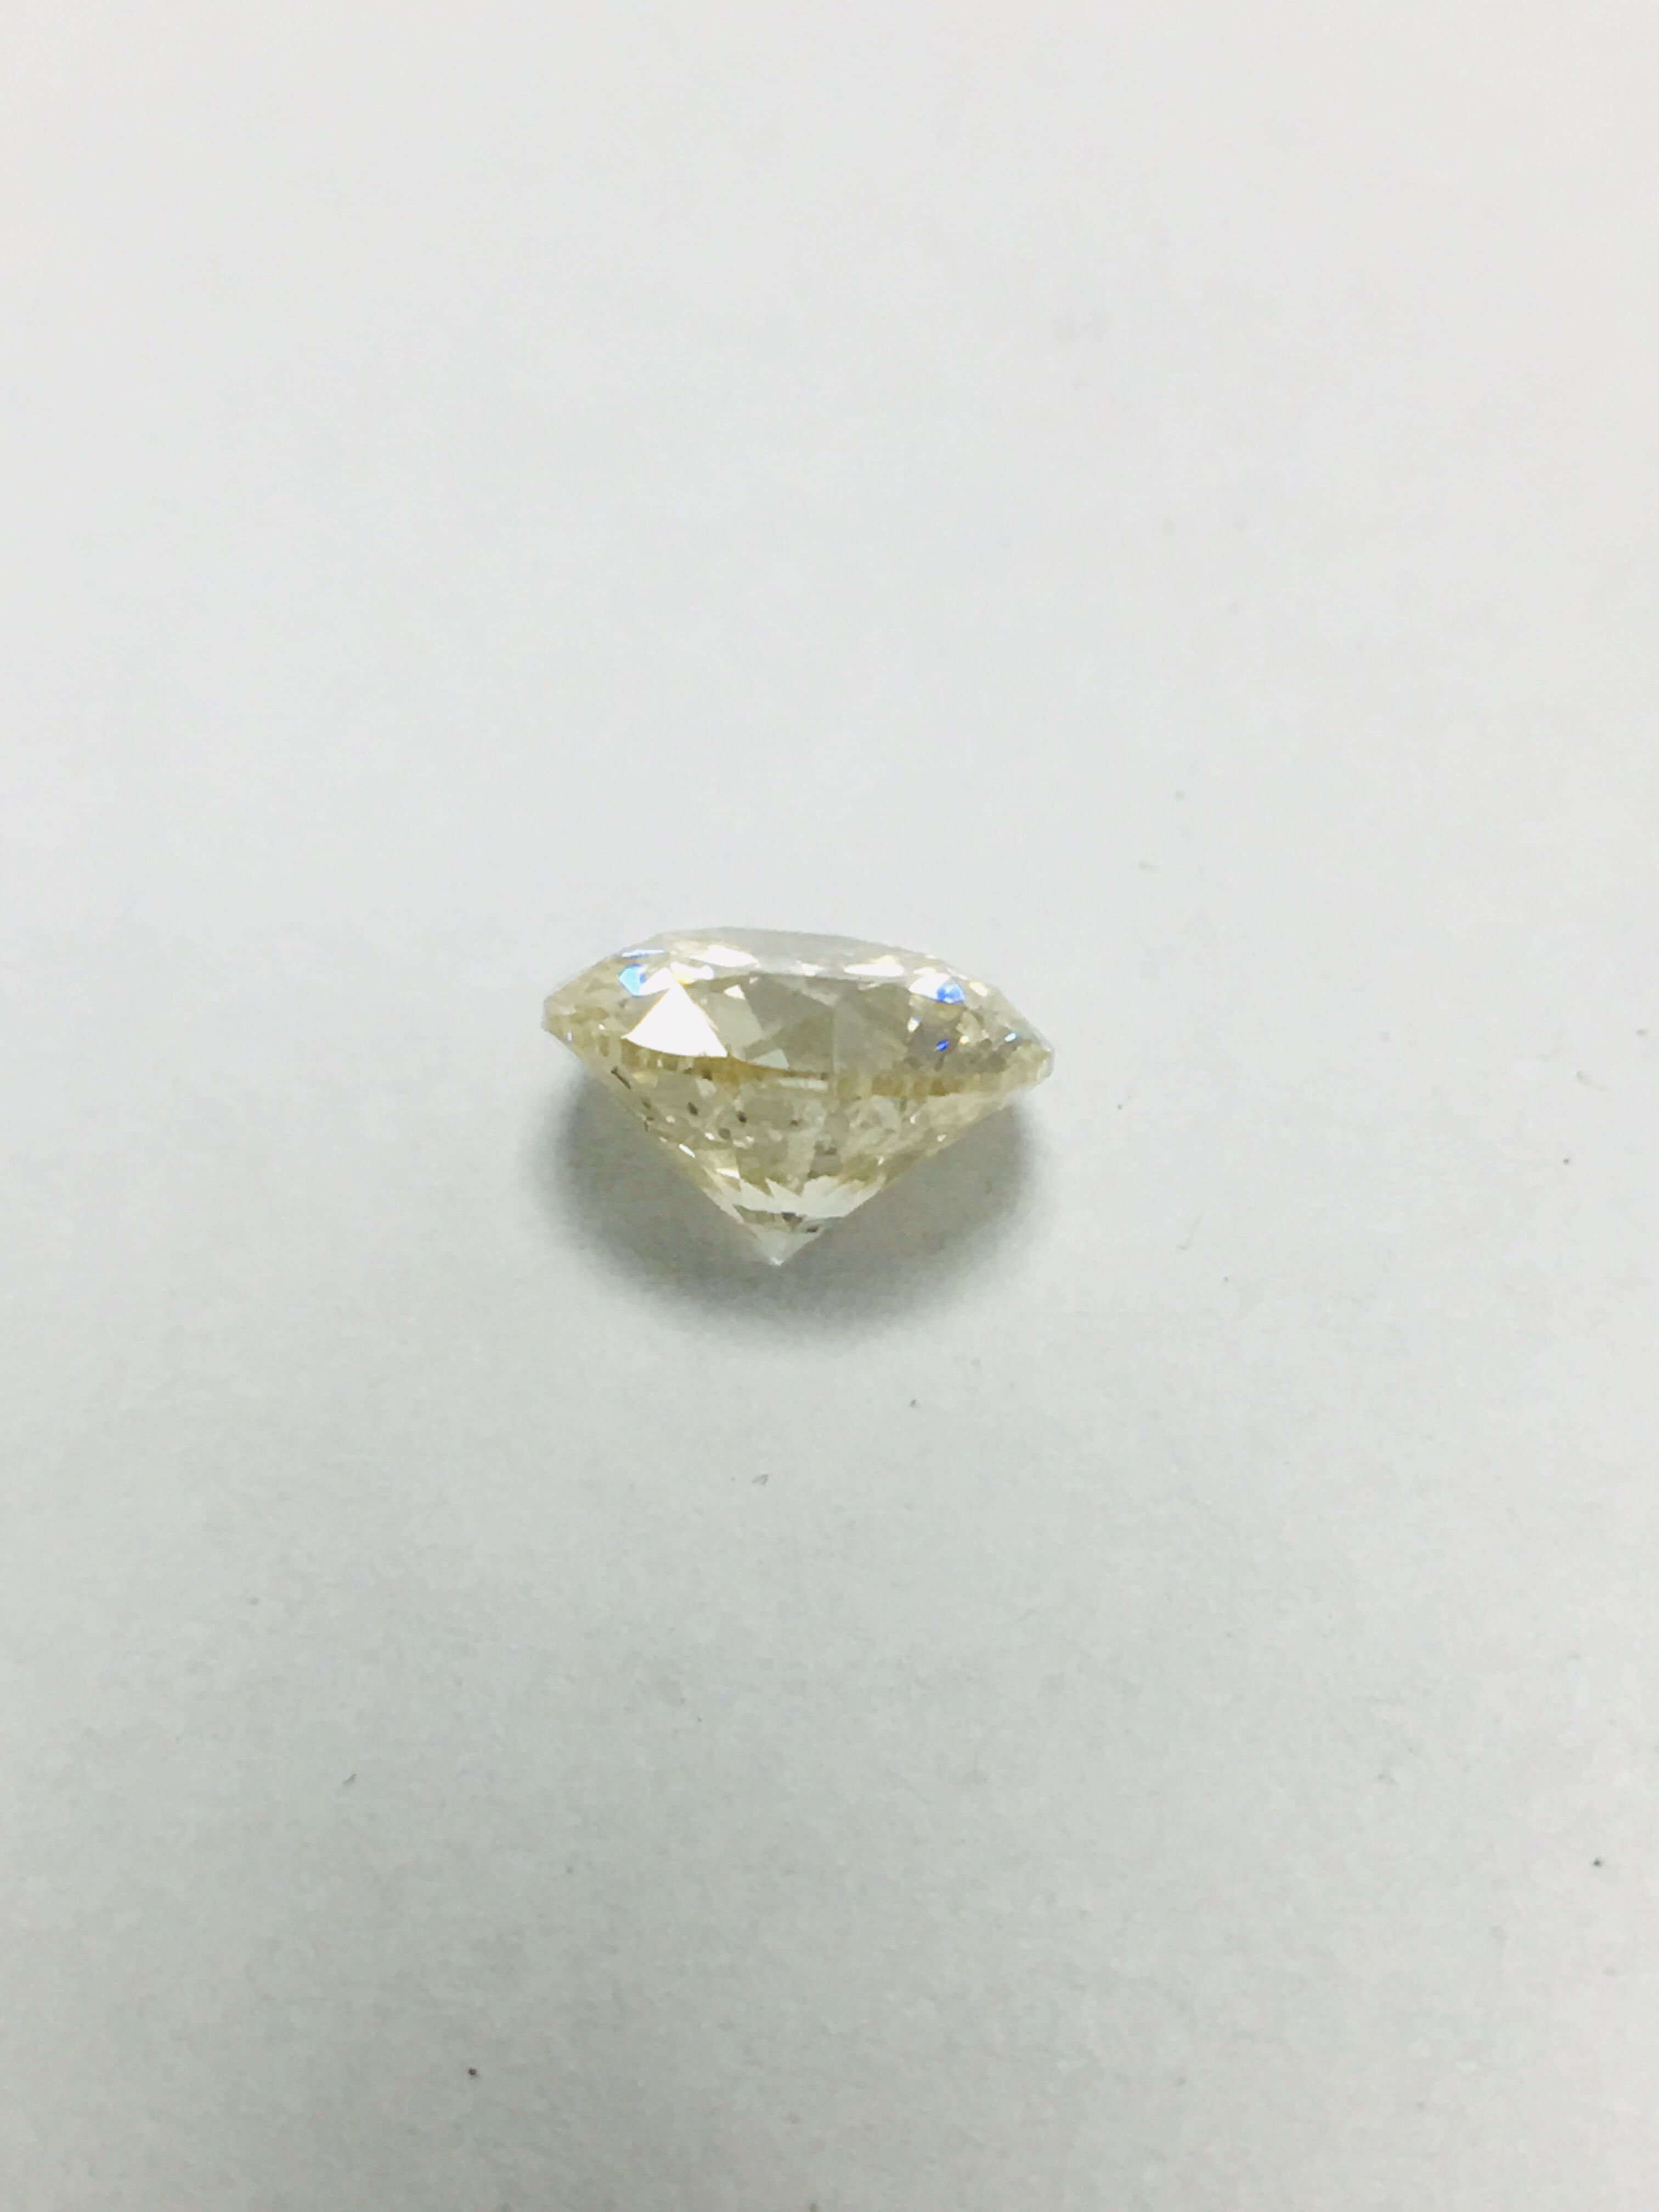 1.55ct Natural Brilliant cut DiamondSI2 clarity - Image 19 of 35